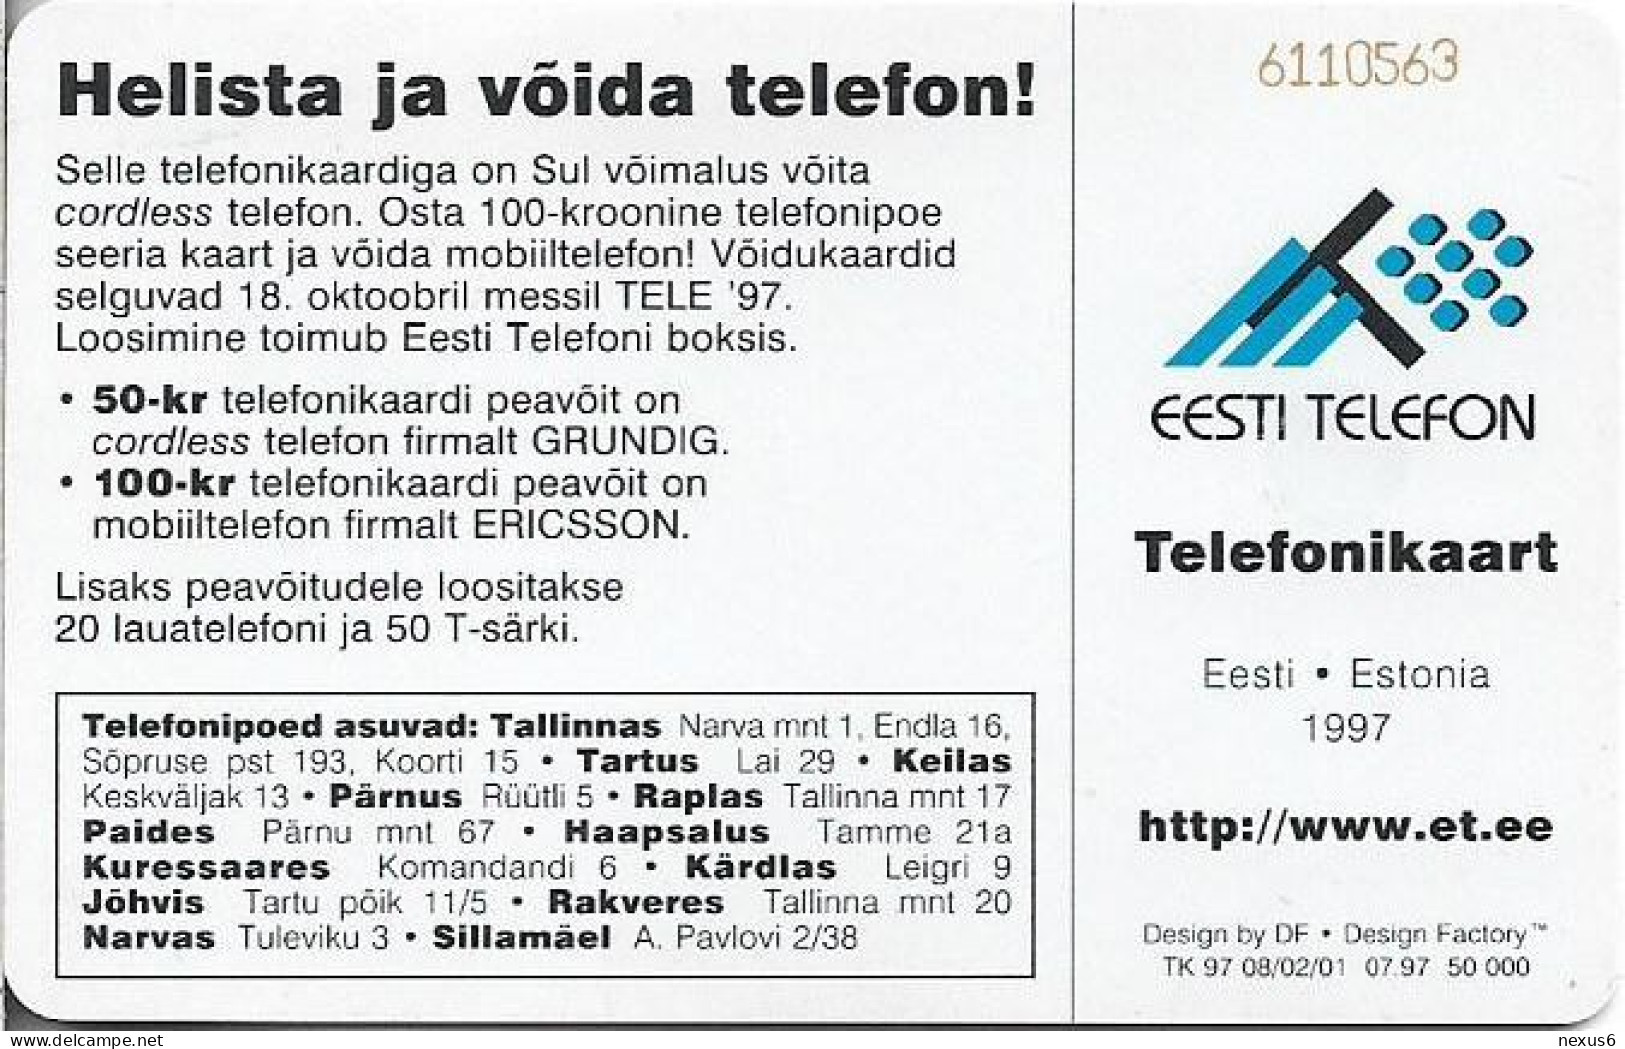 Estonia - Eesti Telefon - Red Lamborghini Countach Car, 07.1997, 50U, 50.000ex, Used - Estonia